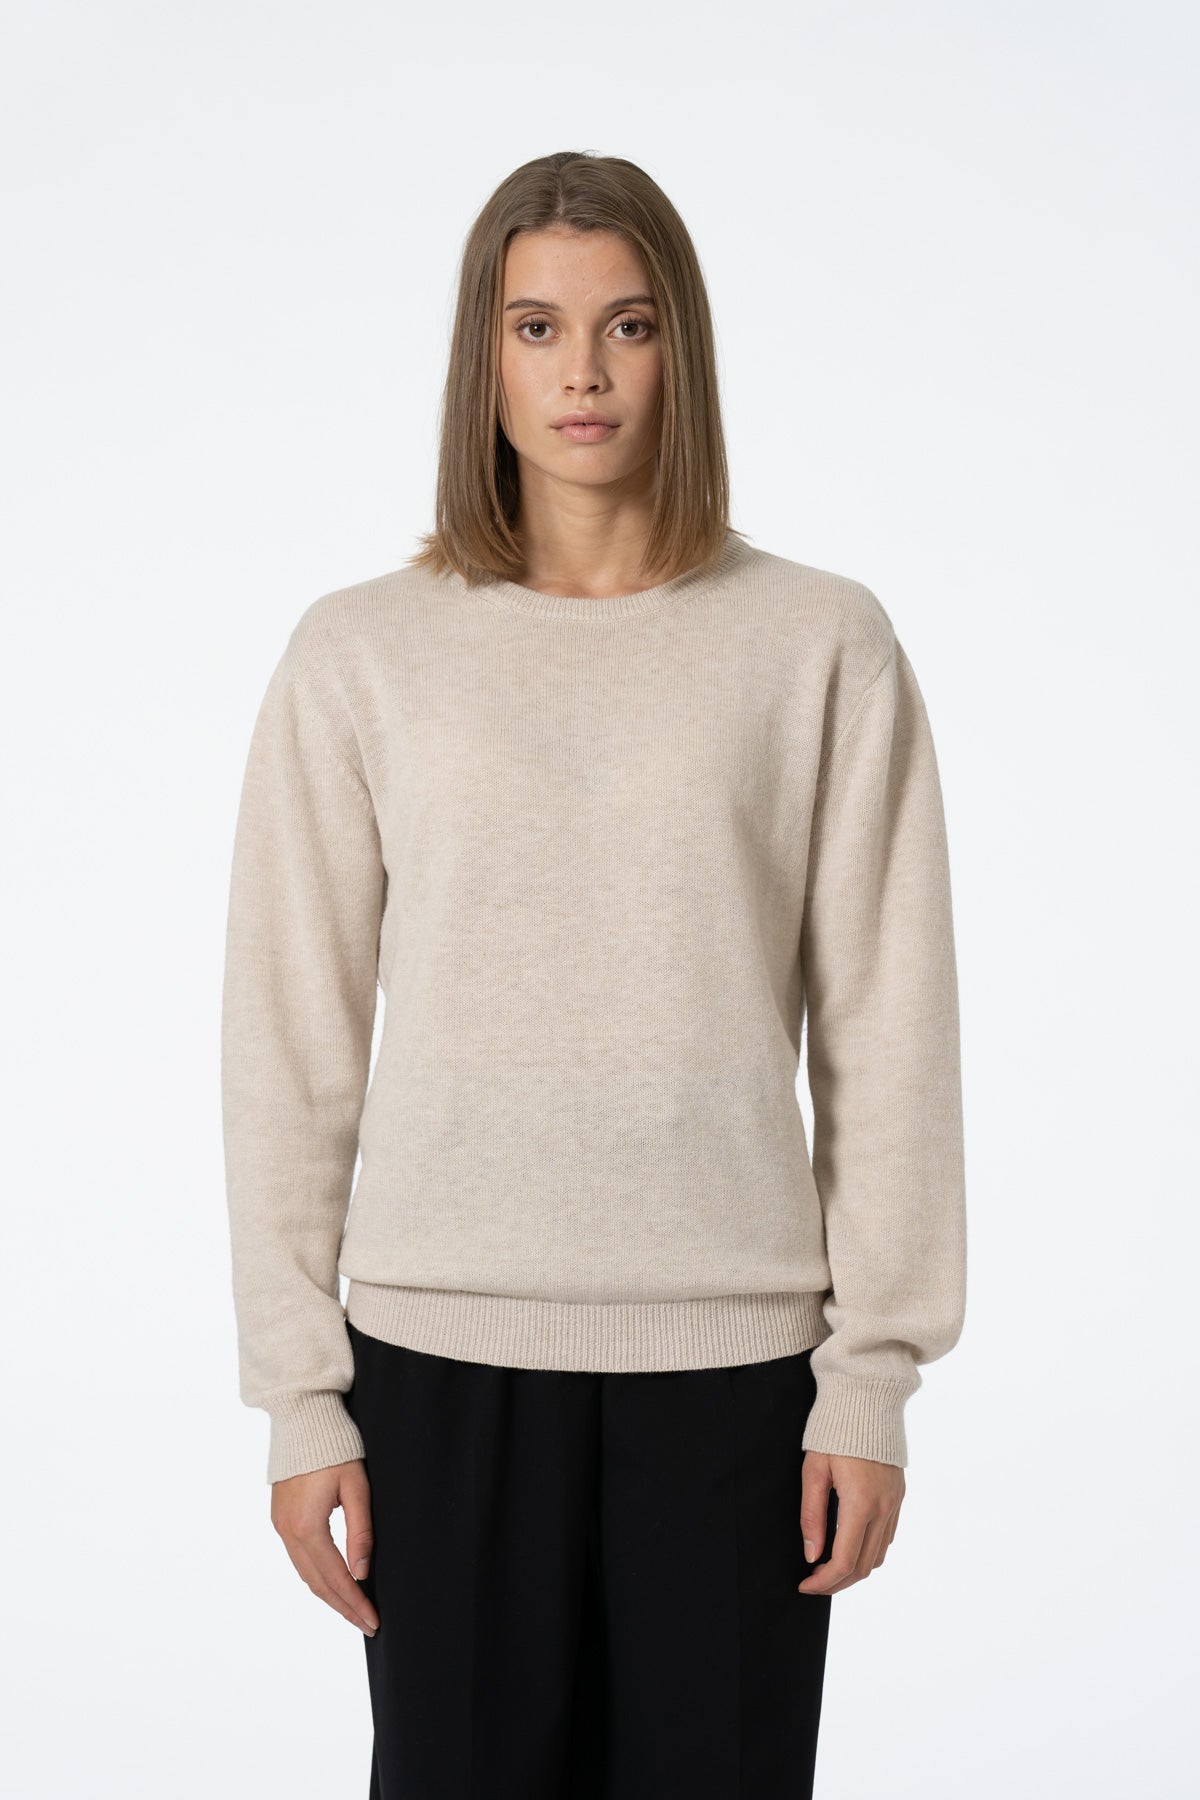 MERINO Unisex Sweater - Almond White